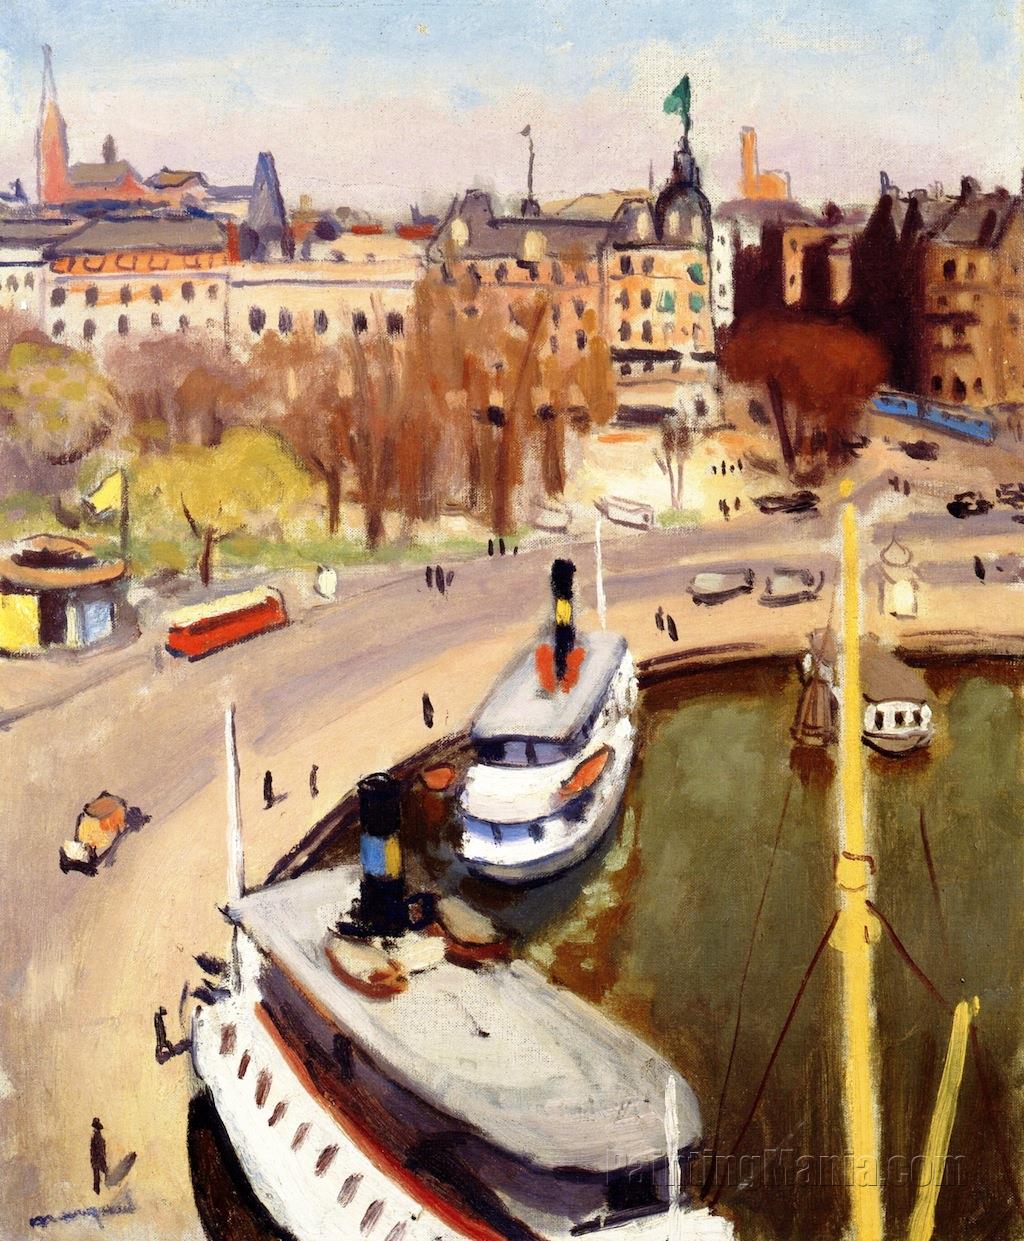 The Port of Stockholm